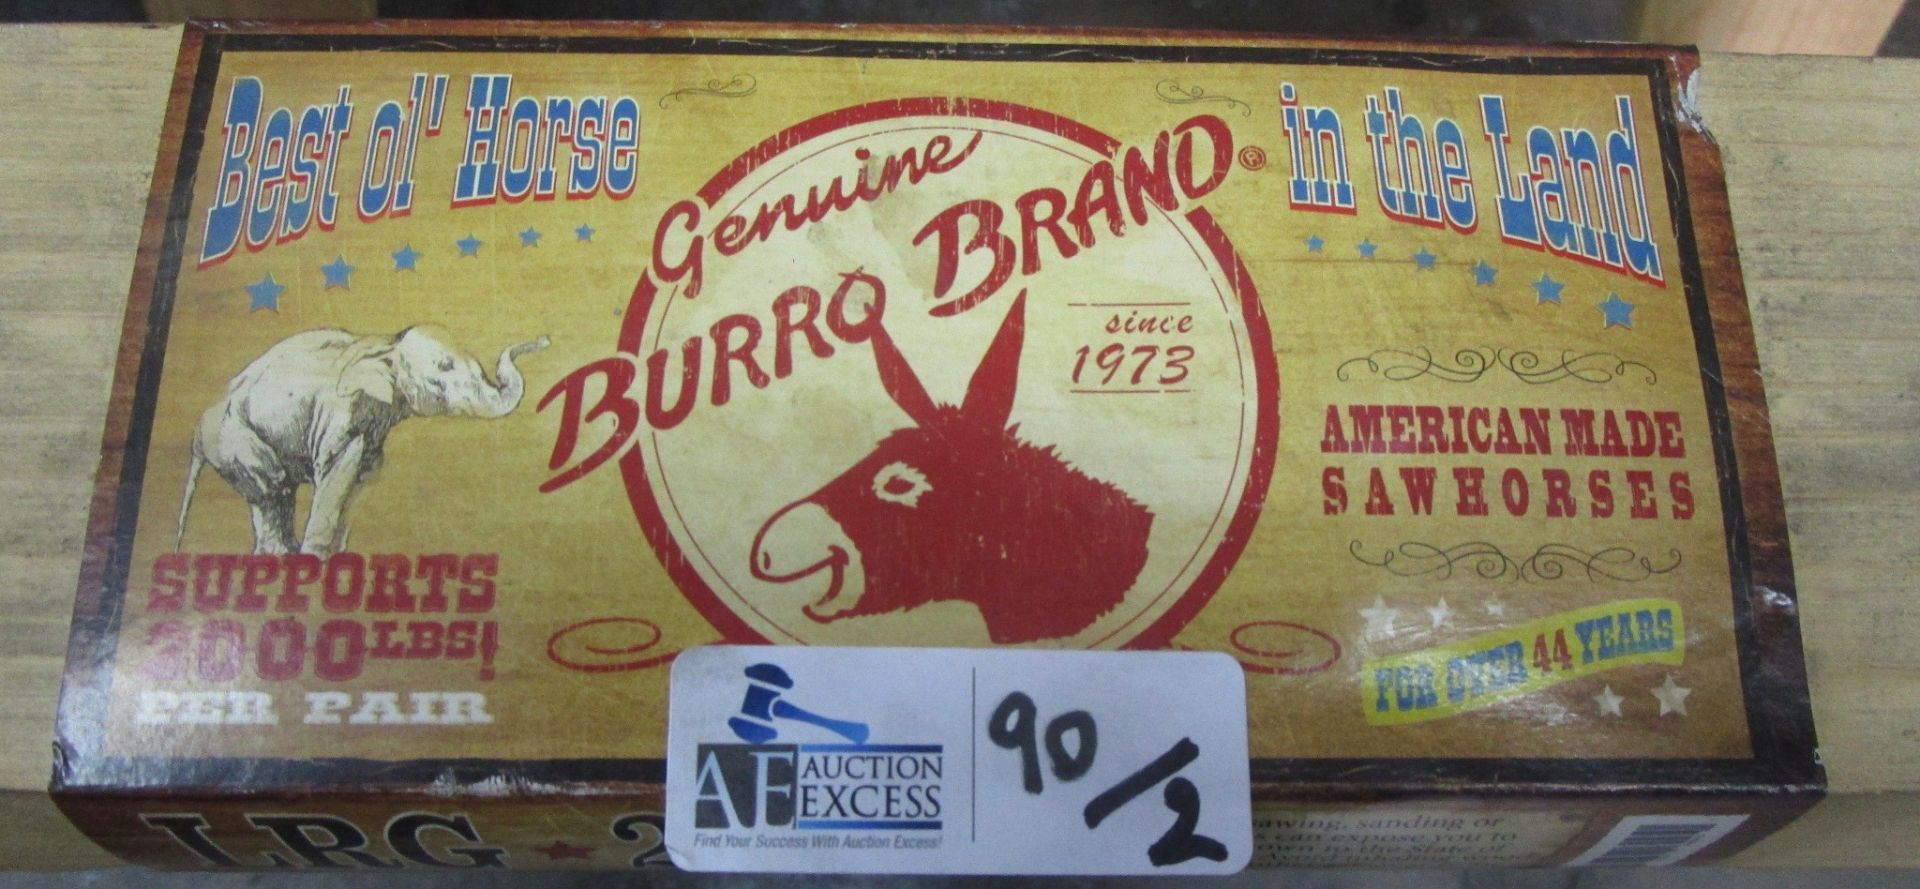 LOT OF 2 BURRO BRAND ORIGINAL WOODEN SAW HORSES - Image 2 of 3